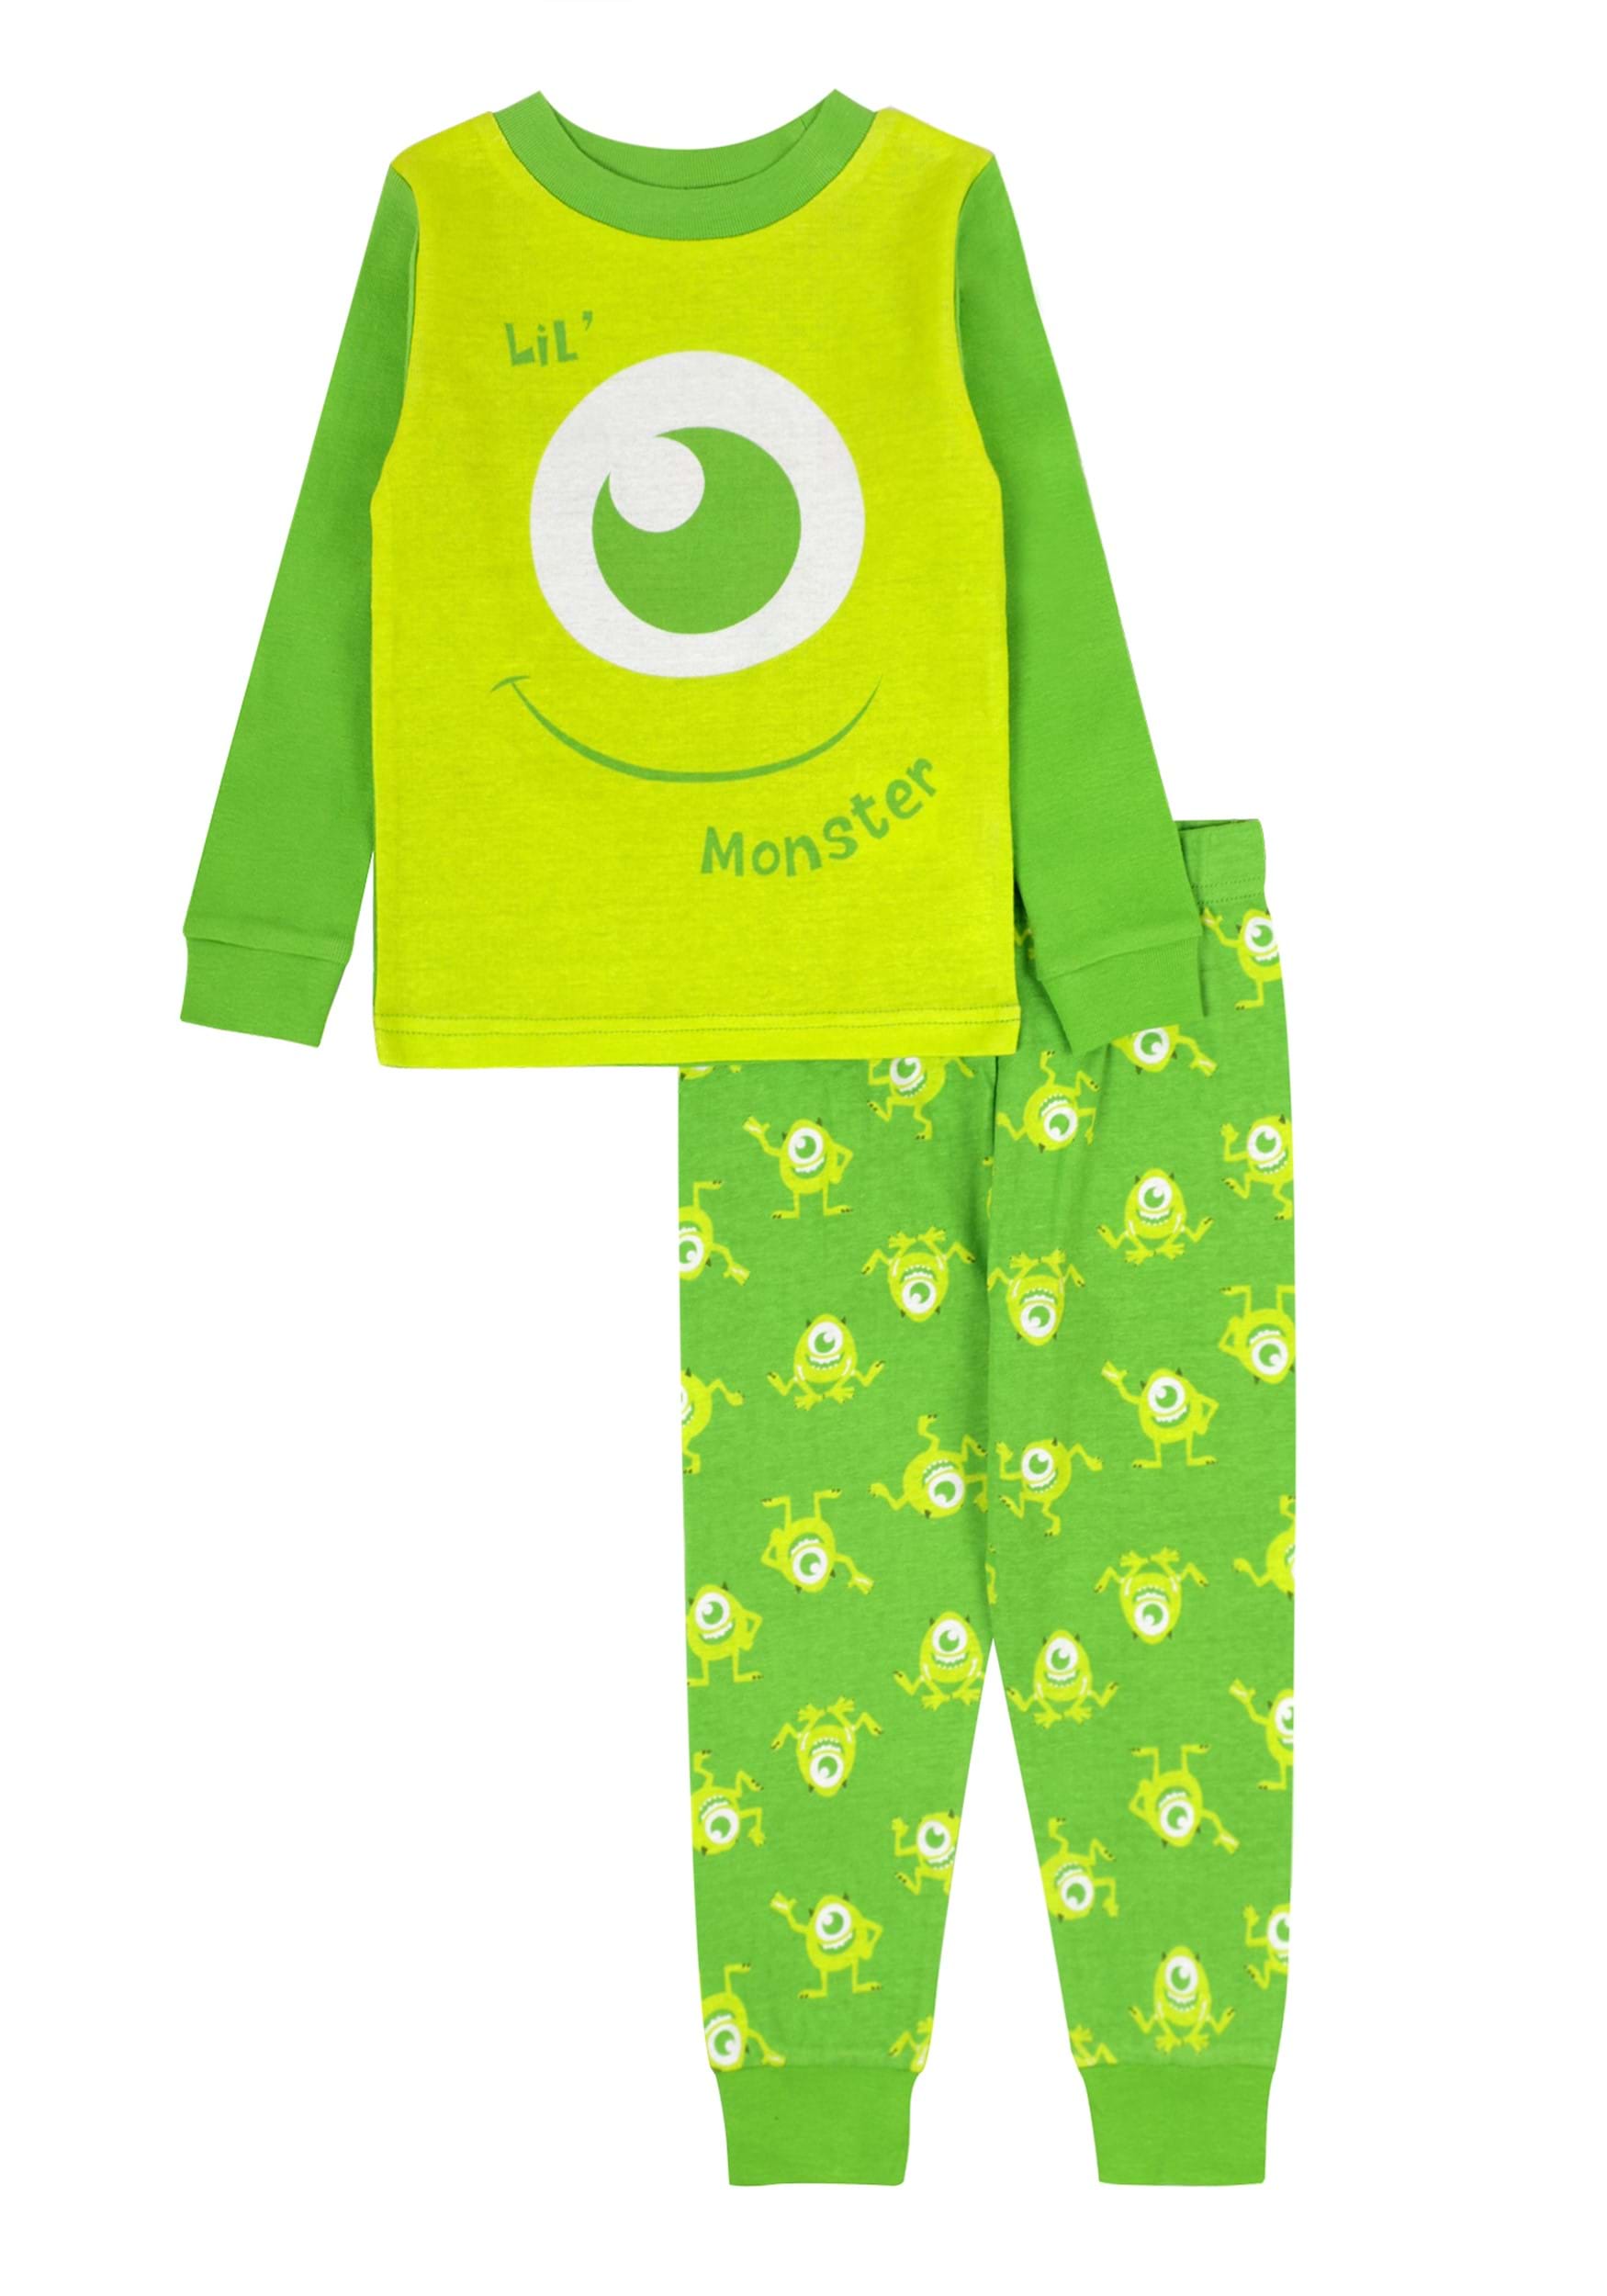 Monsters Inc Toddler Boys Mike Wazowski Pajama Set